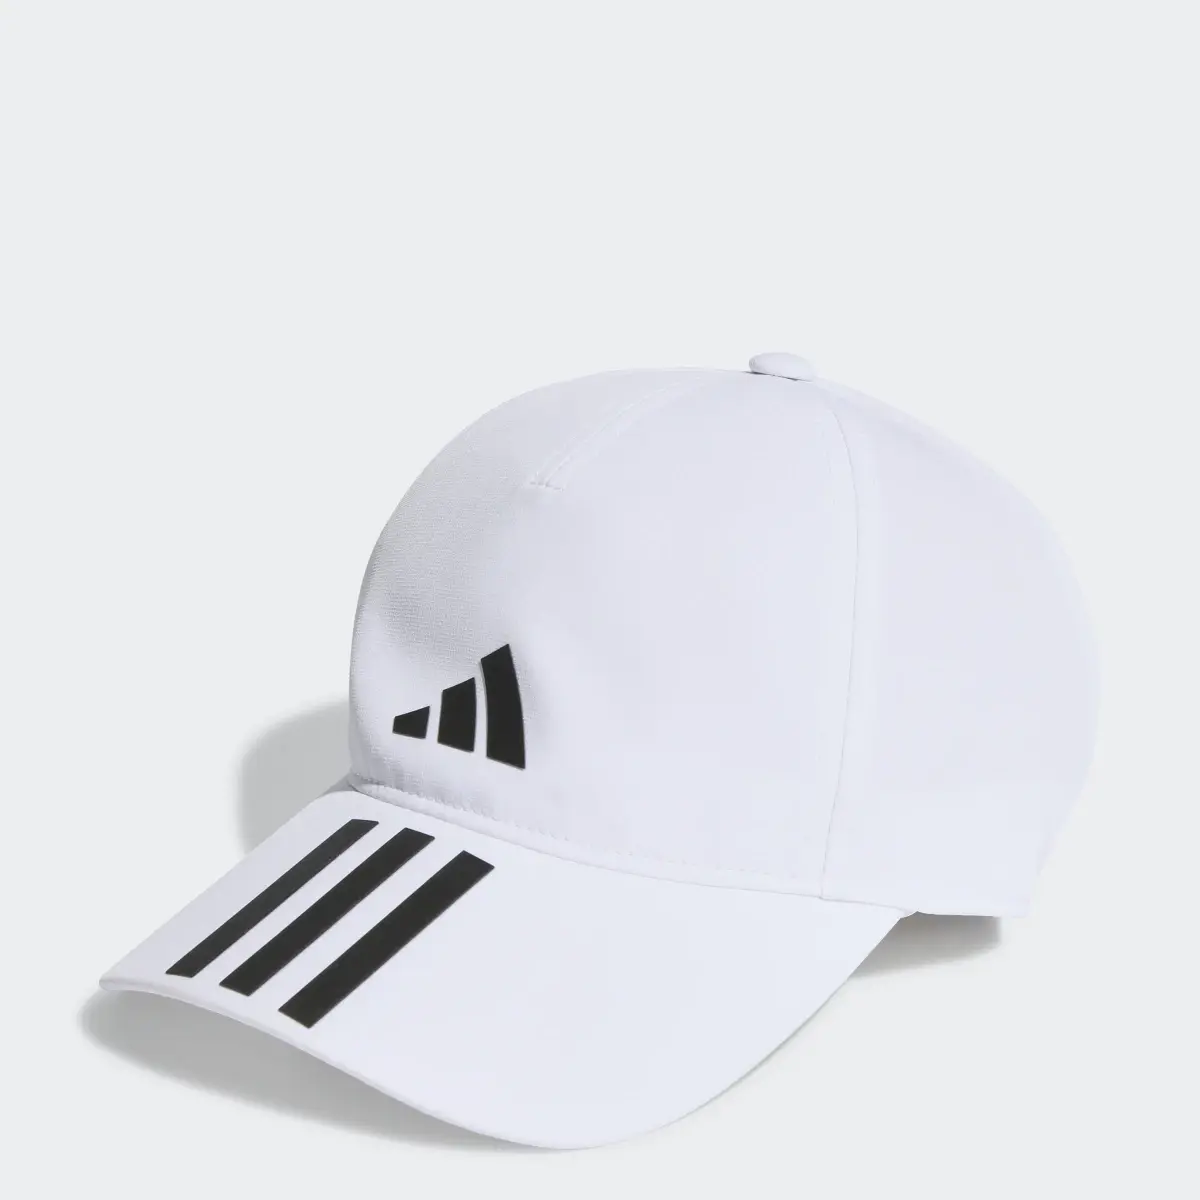 Adidas 3-Stripes AEROREADY Running Training Baseball Cap. 1